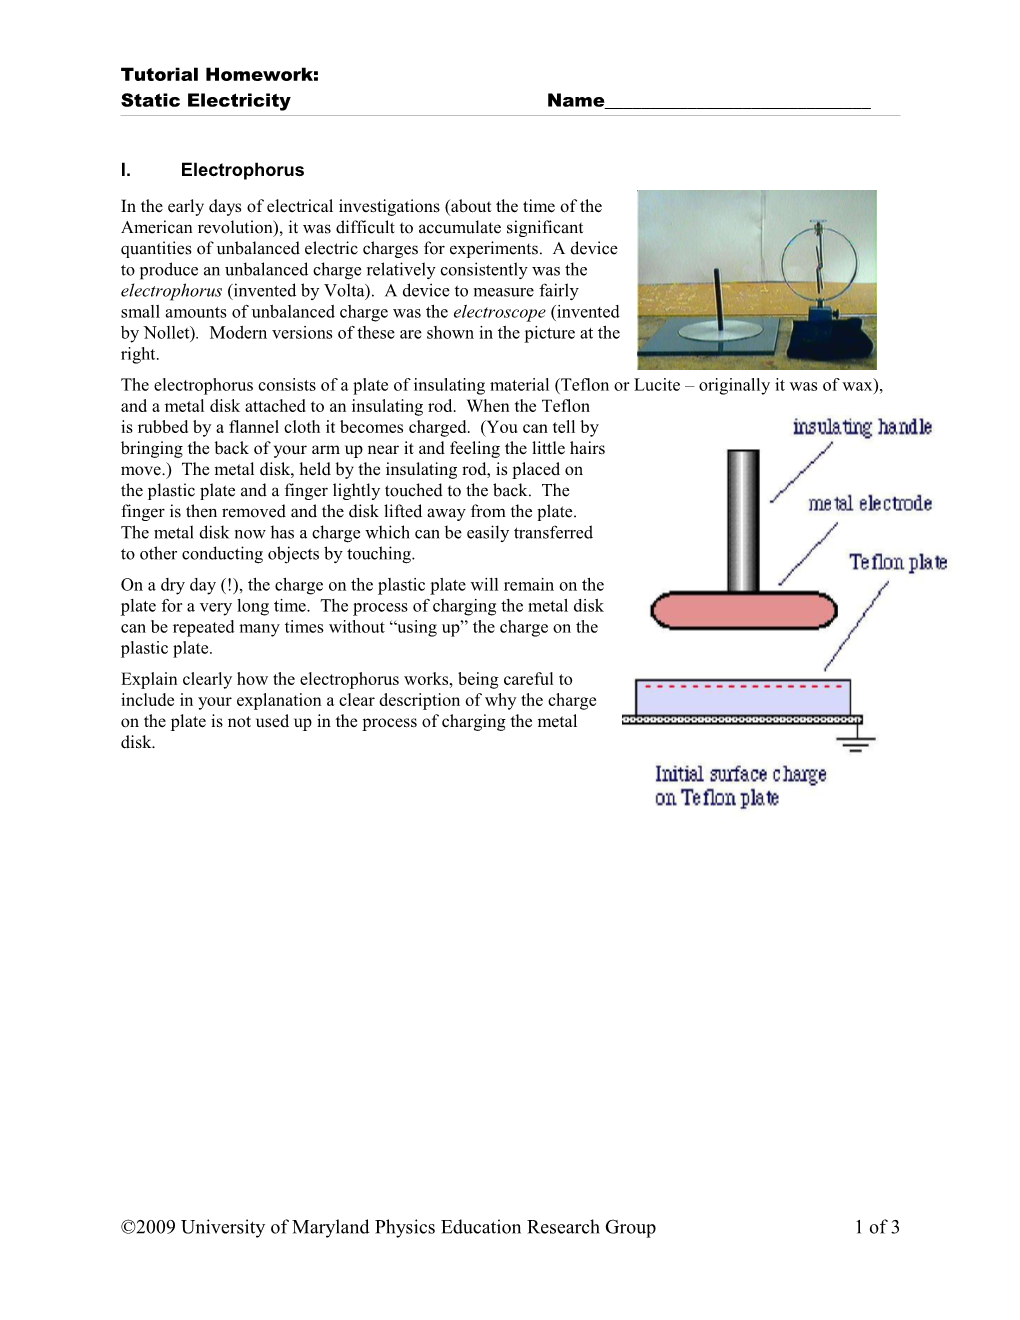 Homework 1: Static Electricity